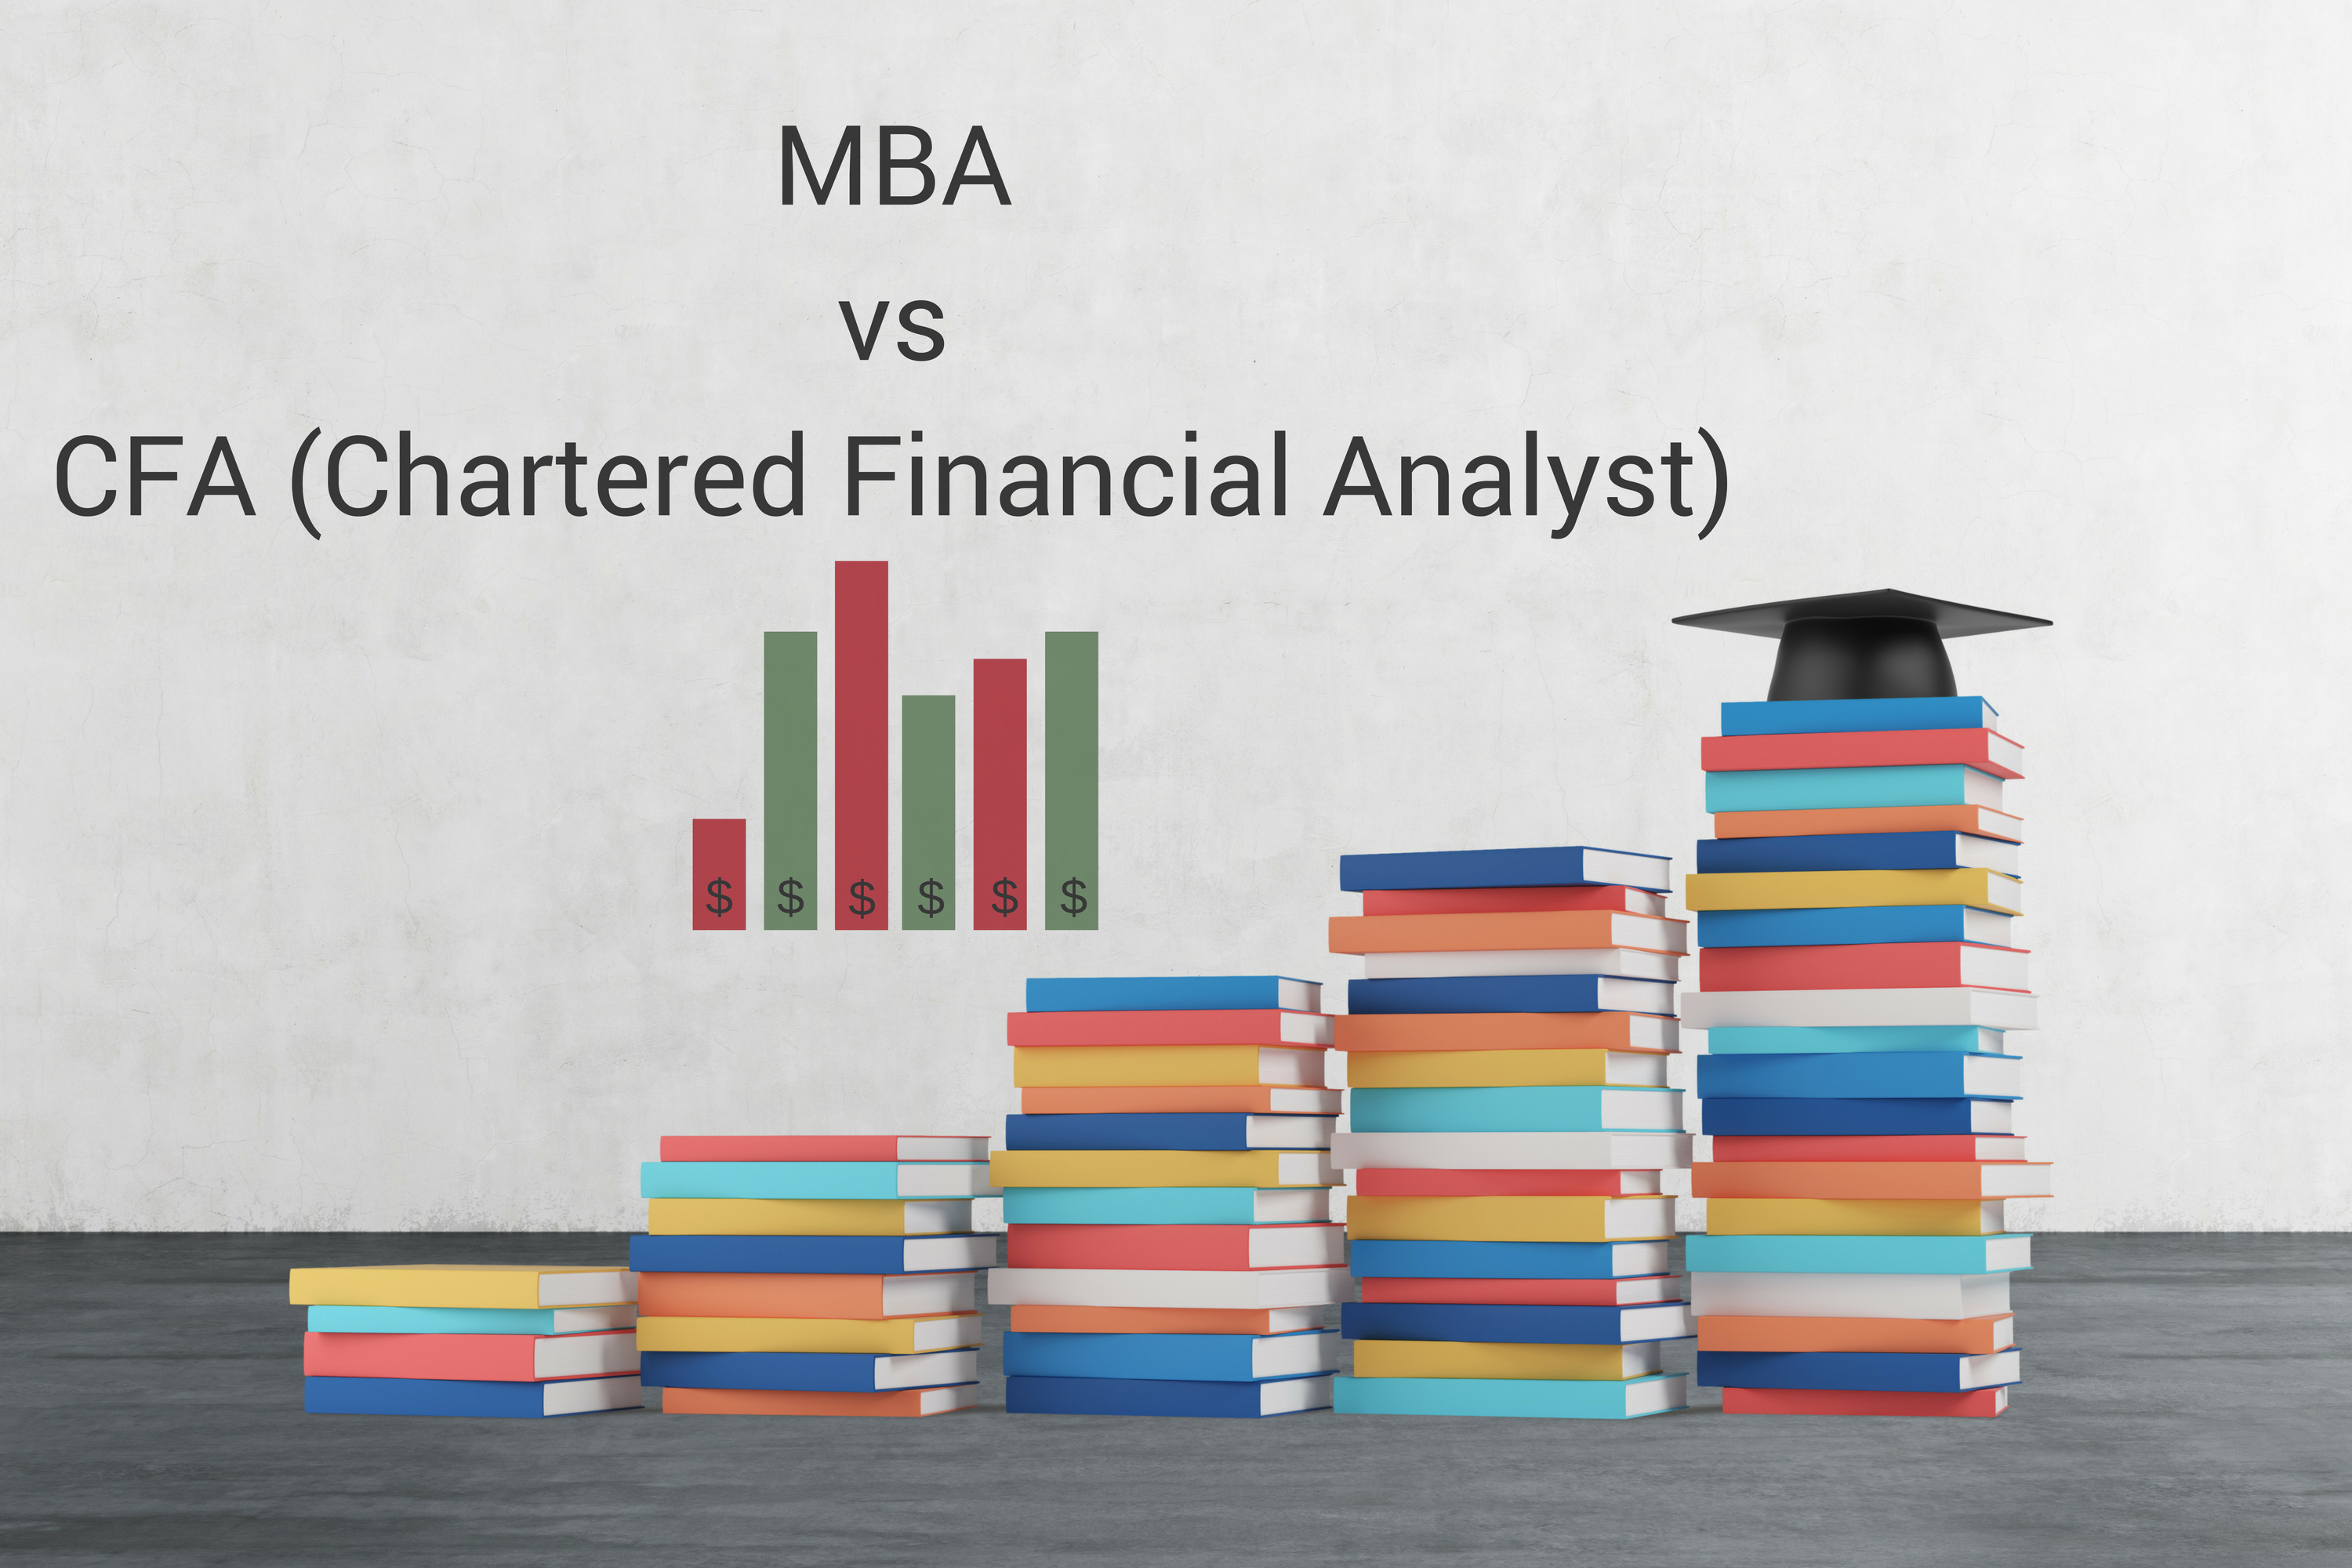 MBA vs. CFA (Chartered Financial Analyst) examPAL GMAT Blog